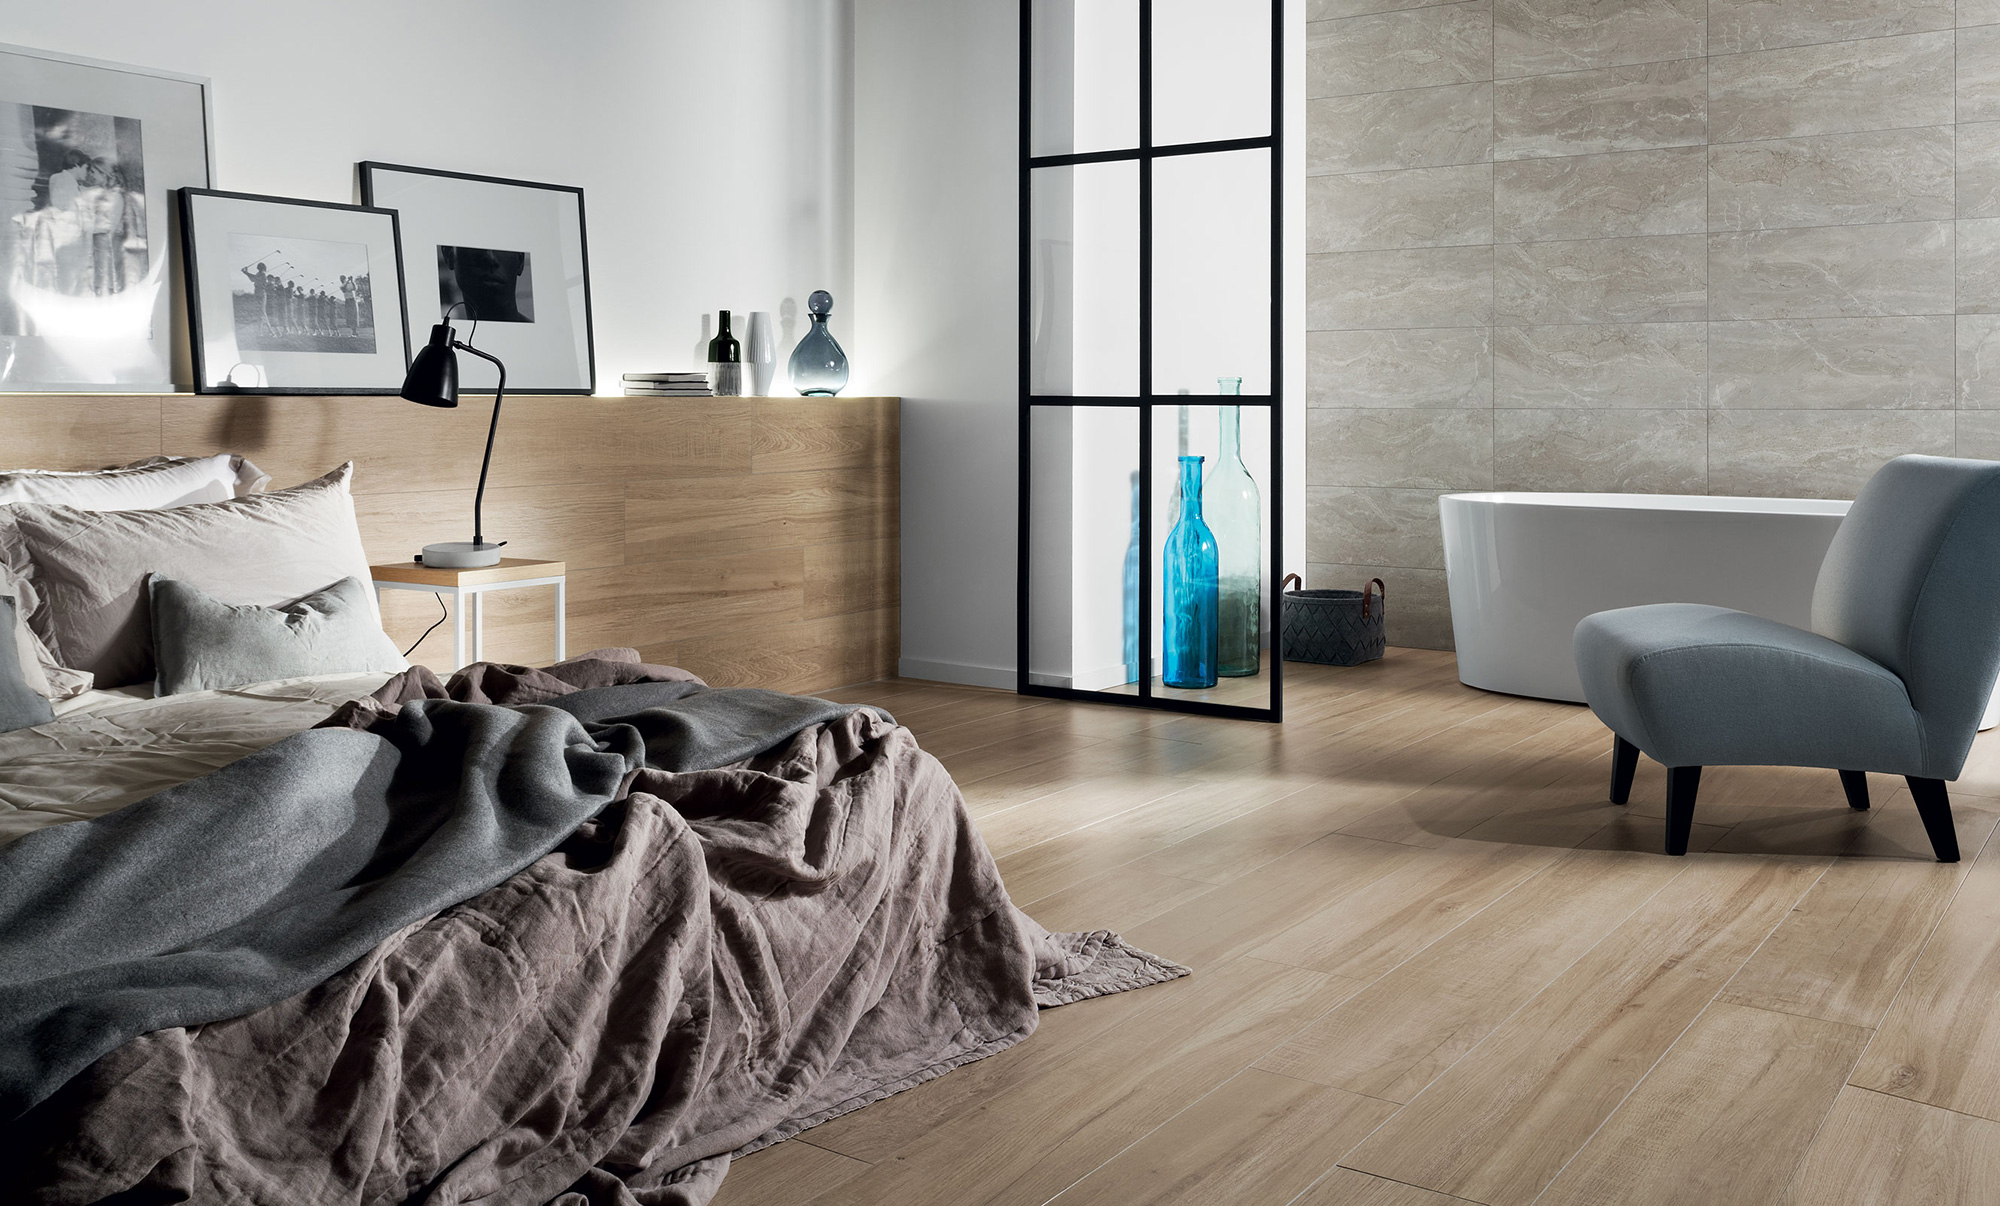 Porcelain Wood tiles in a modern open-plan bathroom & bedroom - Wood Cut Natural